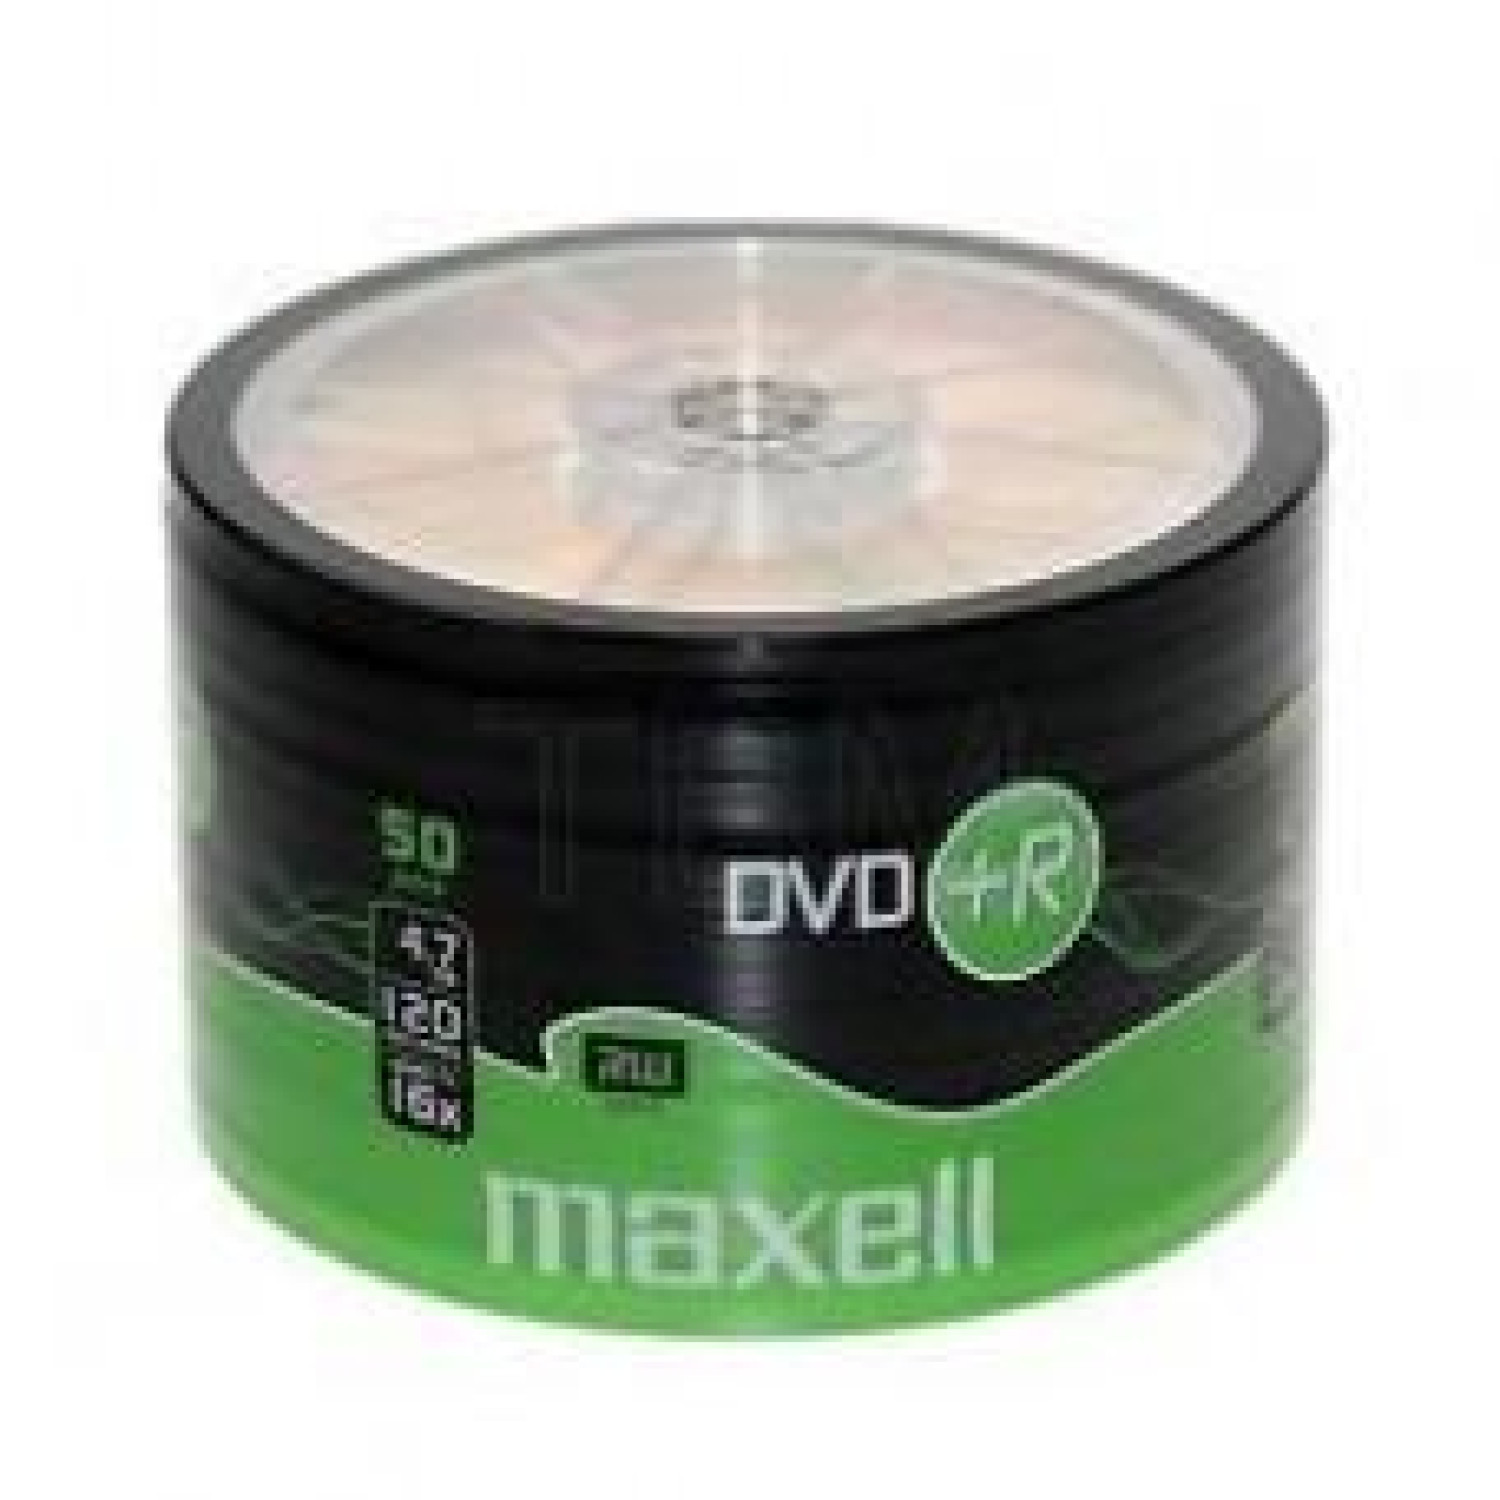 DVD+R MAXELL, 4,7 GB, 16x, 50 бр.